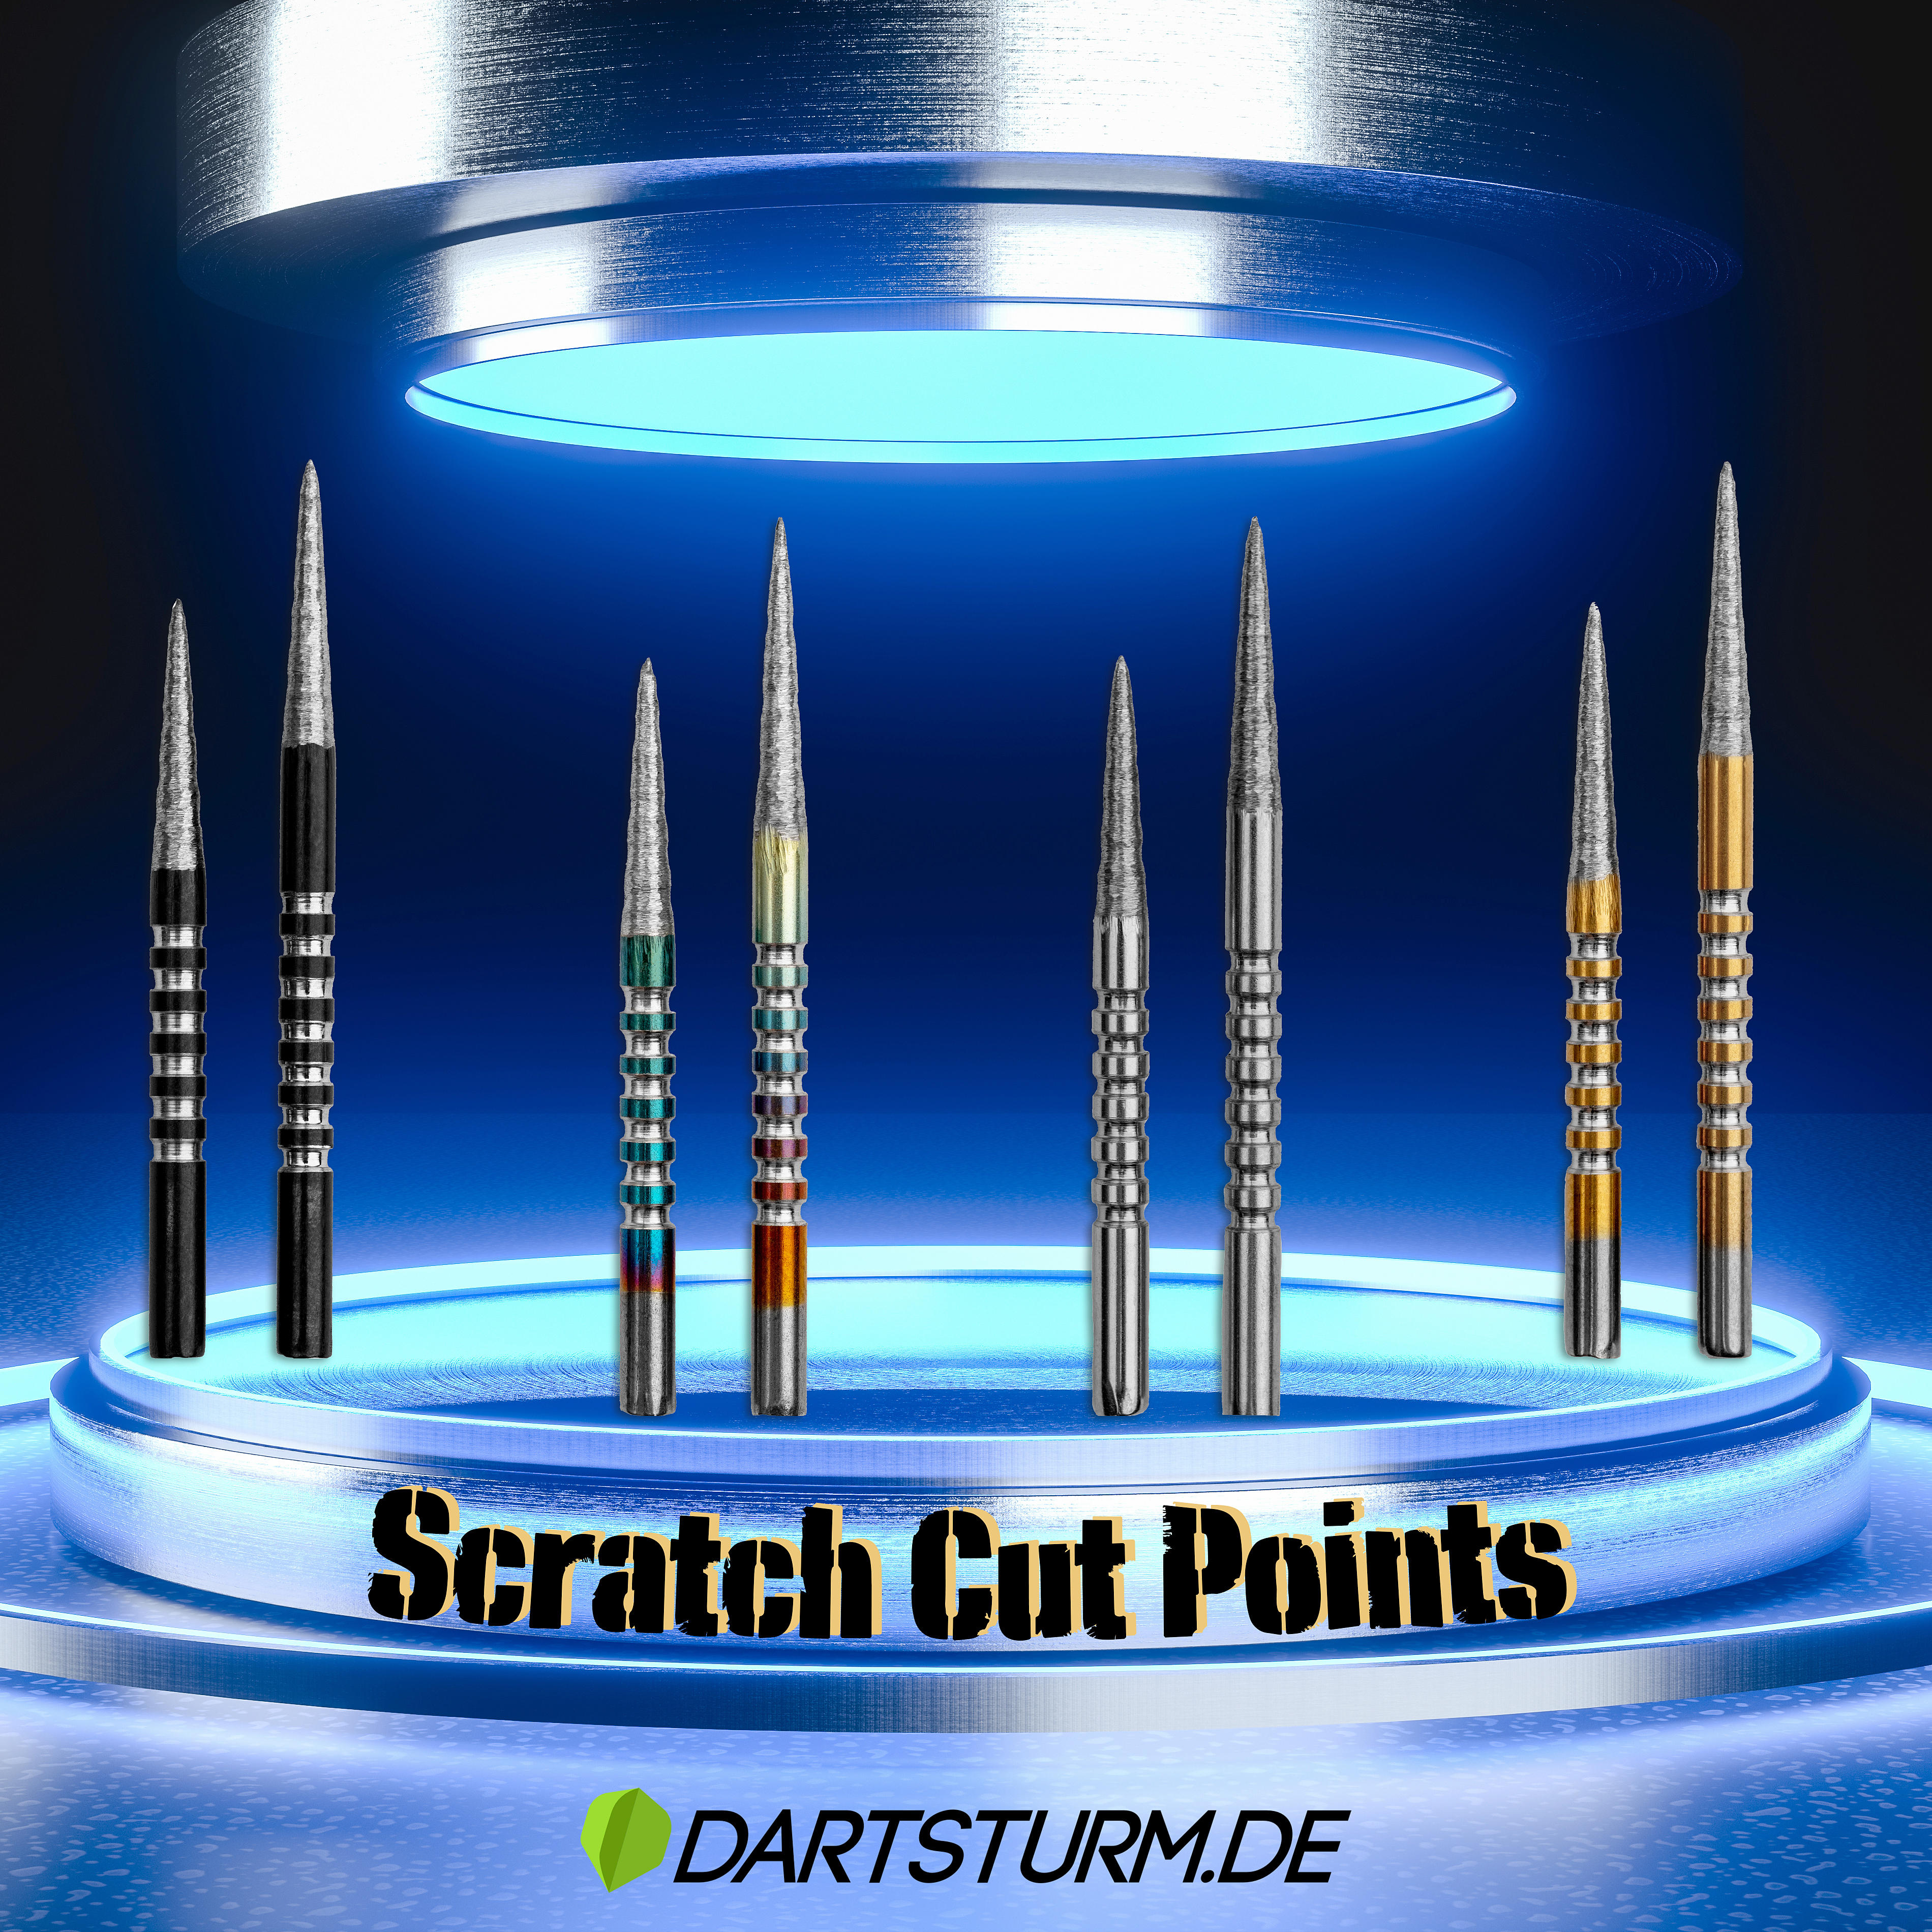 DartSturm.de - Scratch Cut Point Black